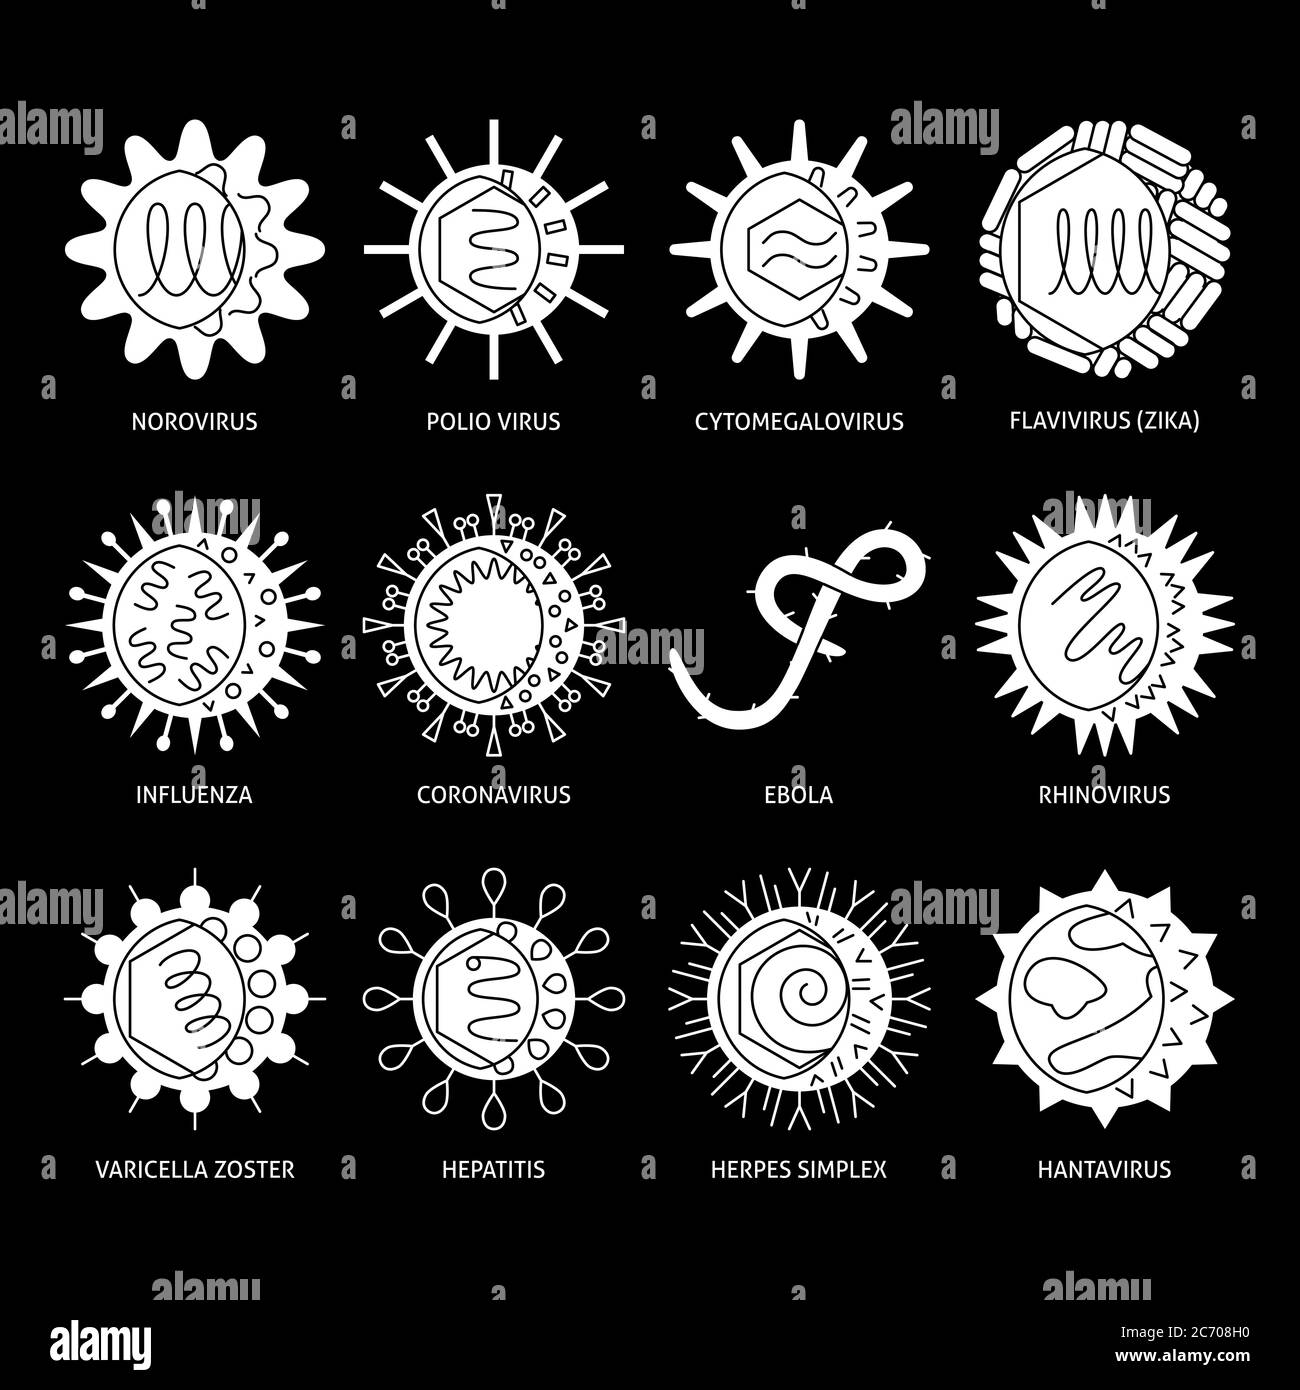 Virus types icon set. Human disease pathogen silhouette symbols collection. Vector illustration. Stock Vector